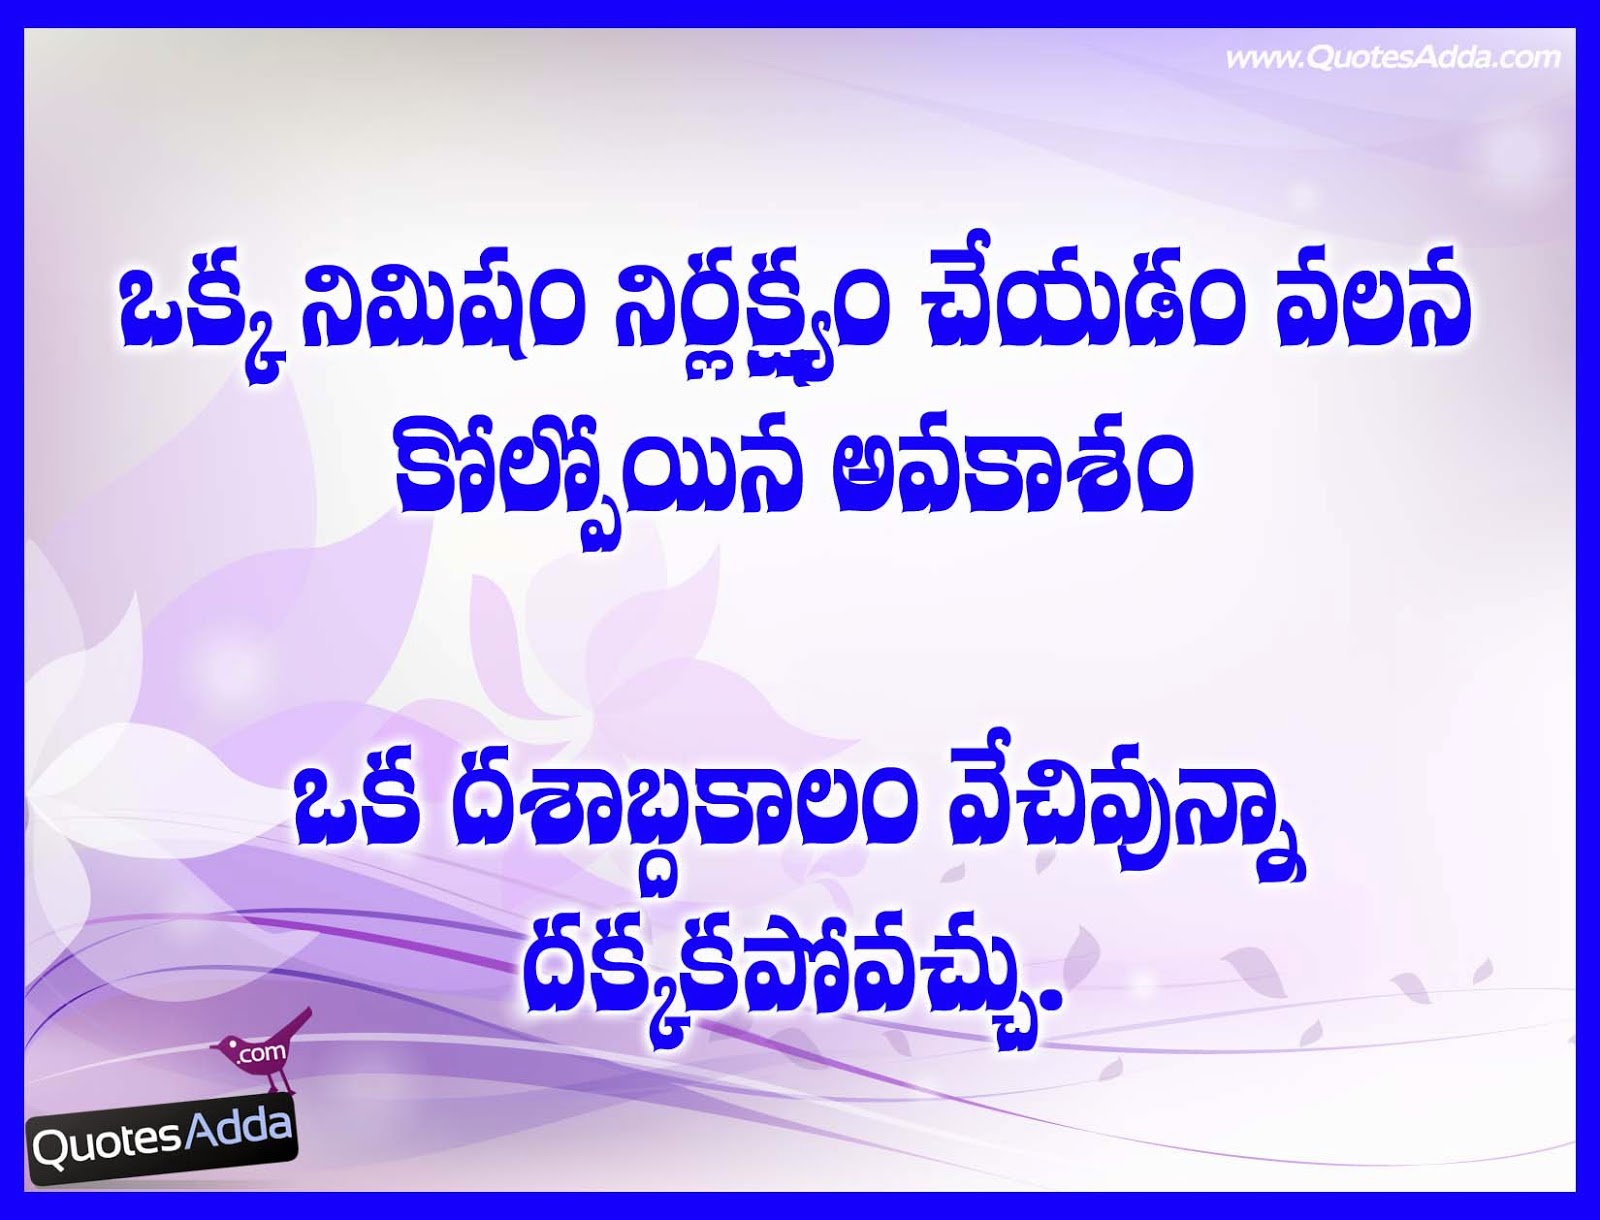 Telugu Telugu Life Failure Quotes with Telugu Life Quotations